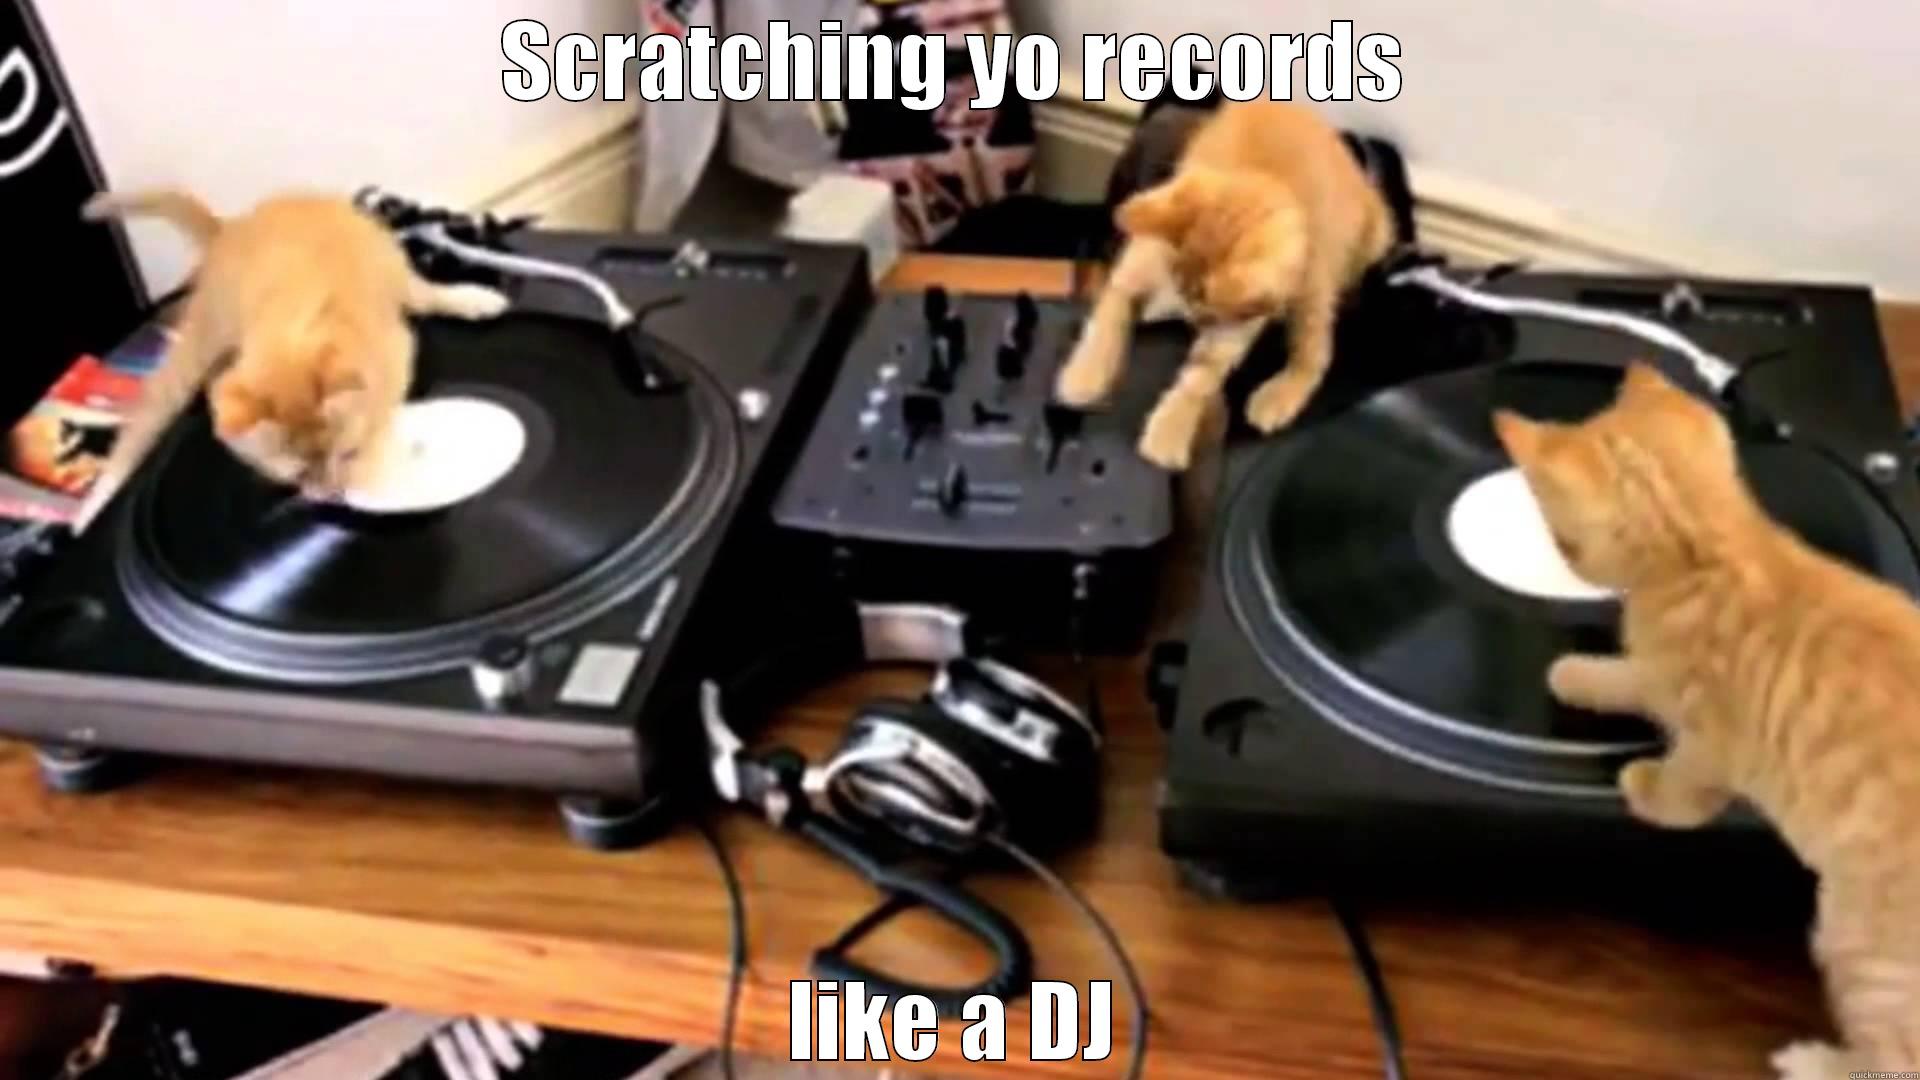 Scratching Records, Like a DJ - SCRATCHING YO RECORDS LIKE A DJ Misc